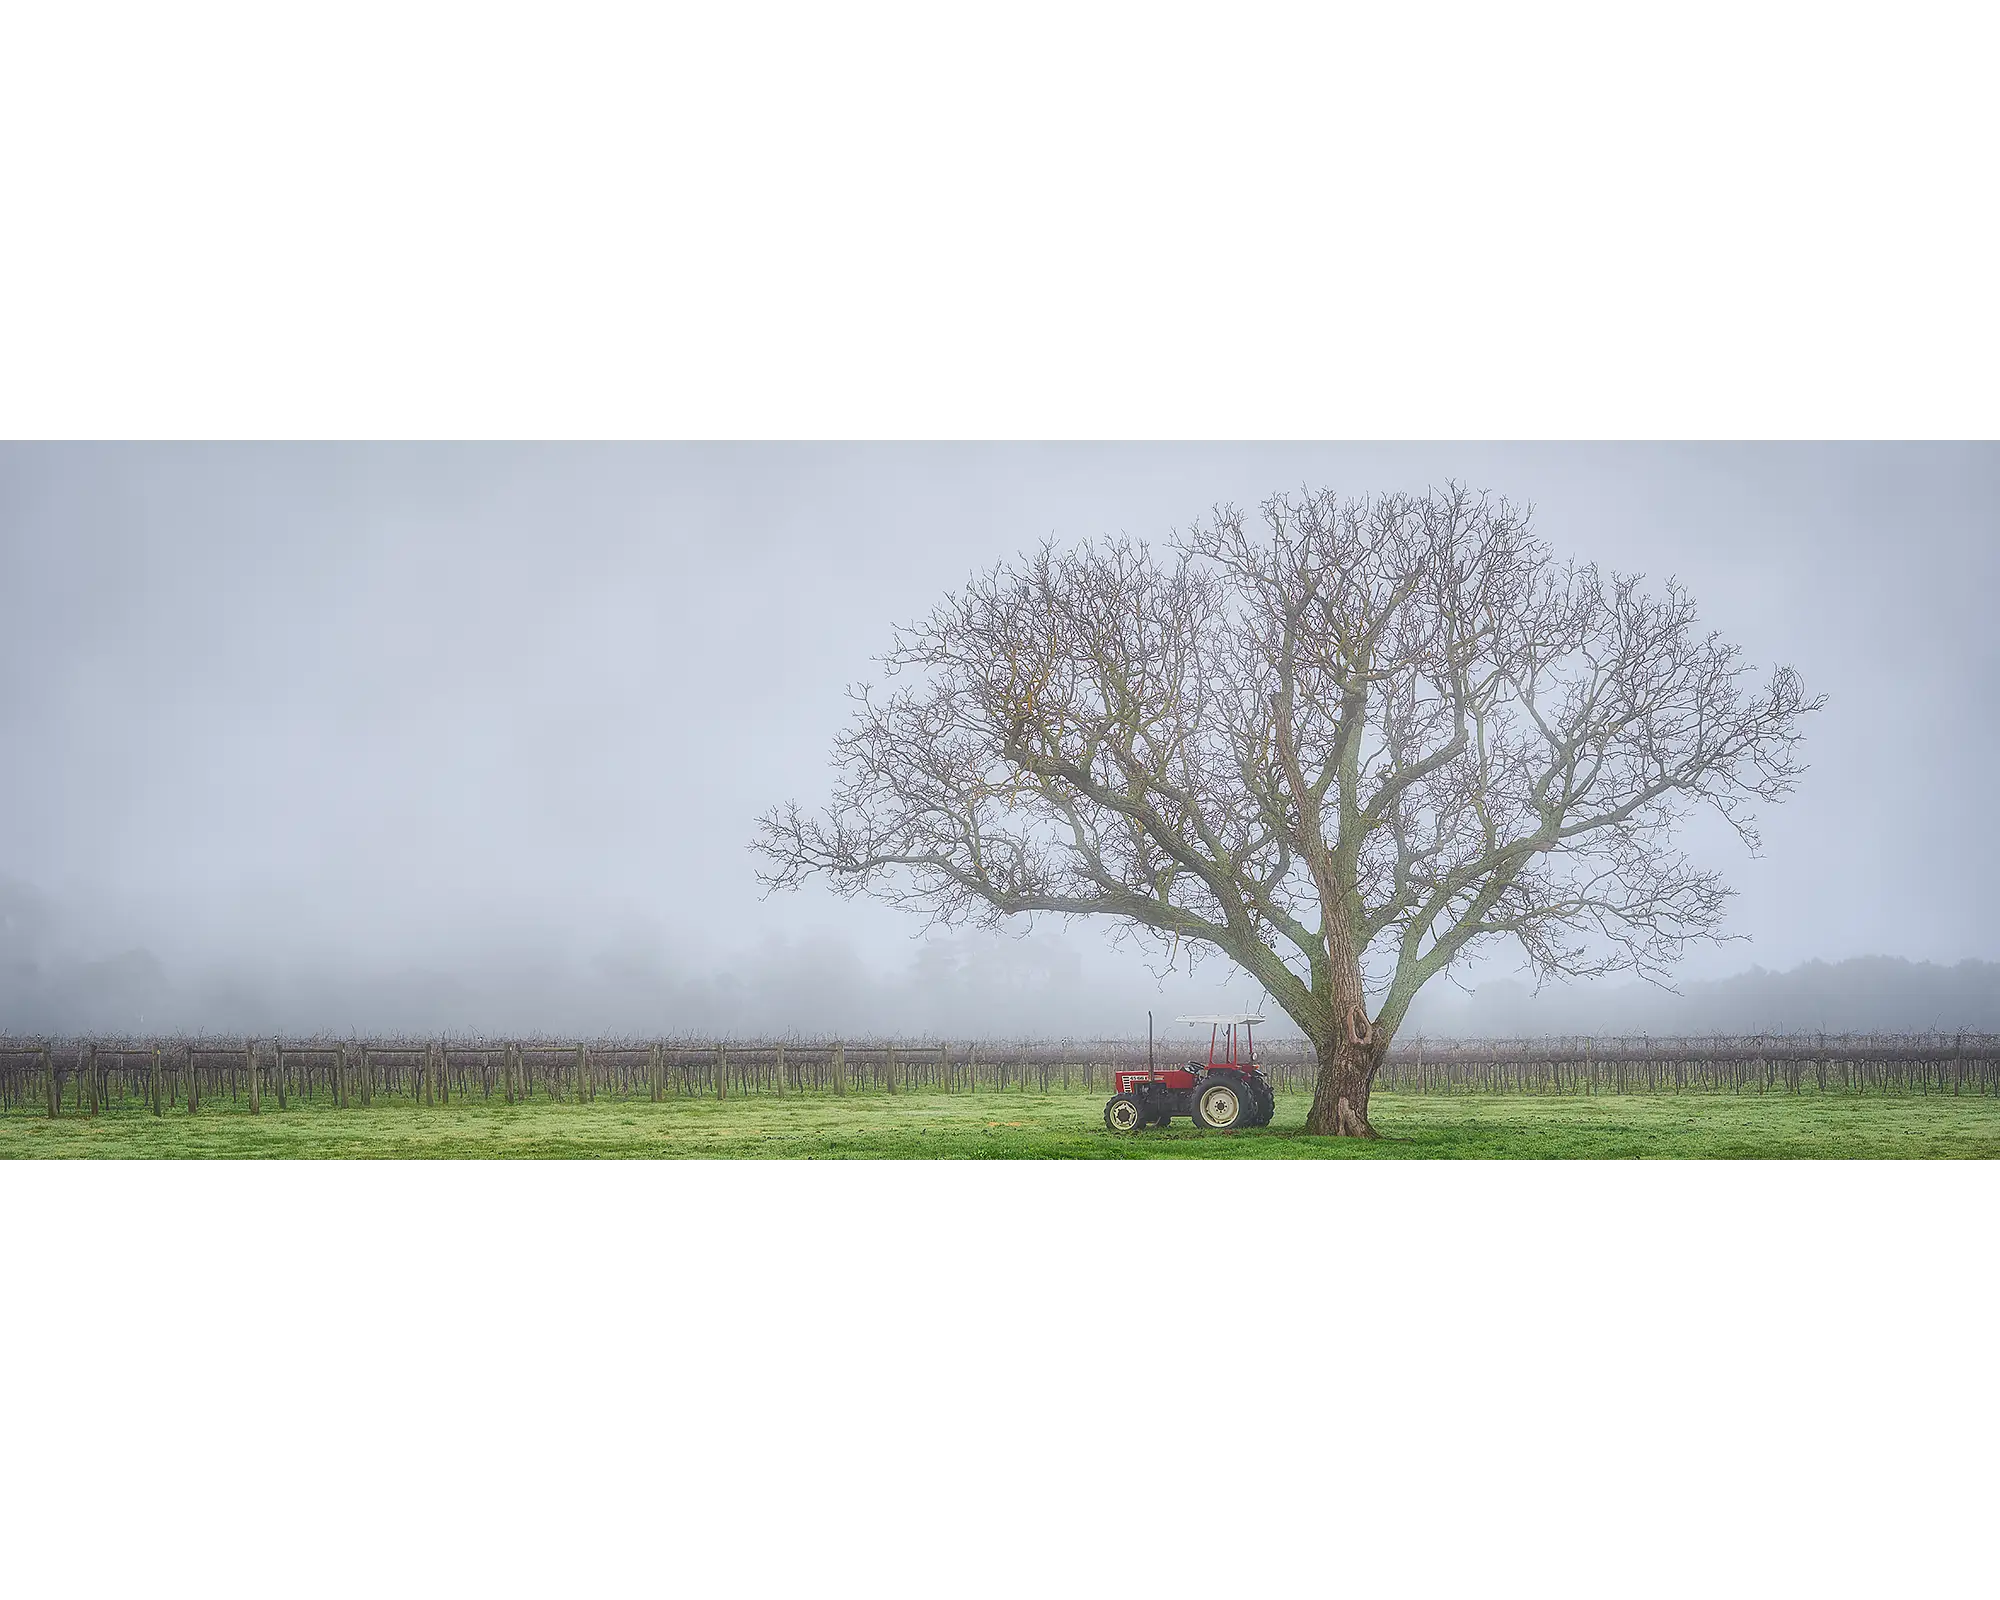 Tractor next to tree amongst vineyard near Bright, Victoria.